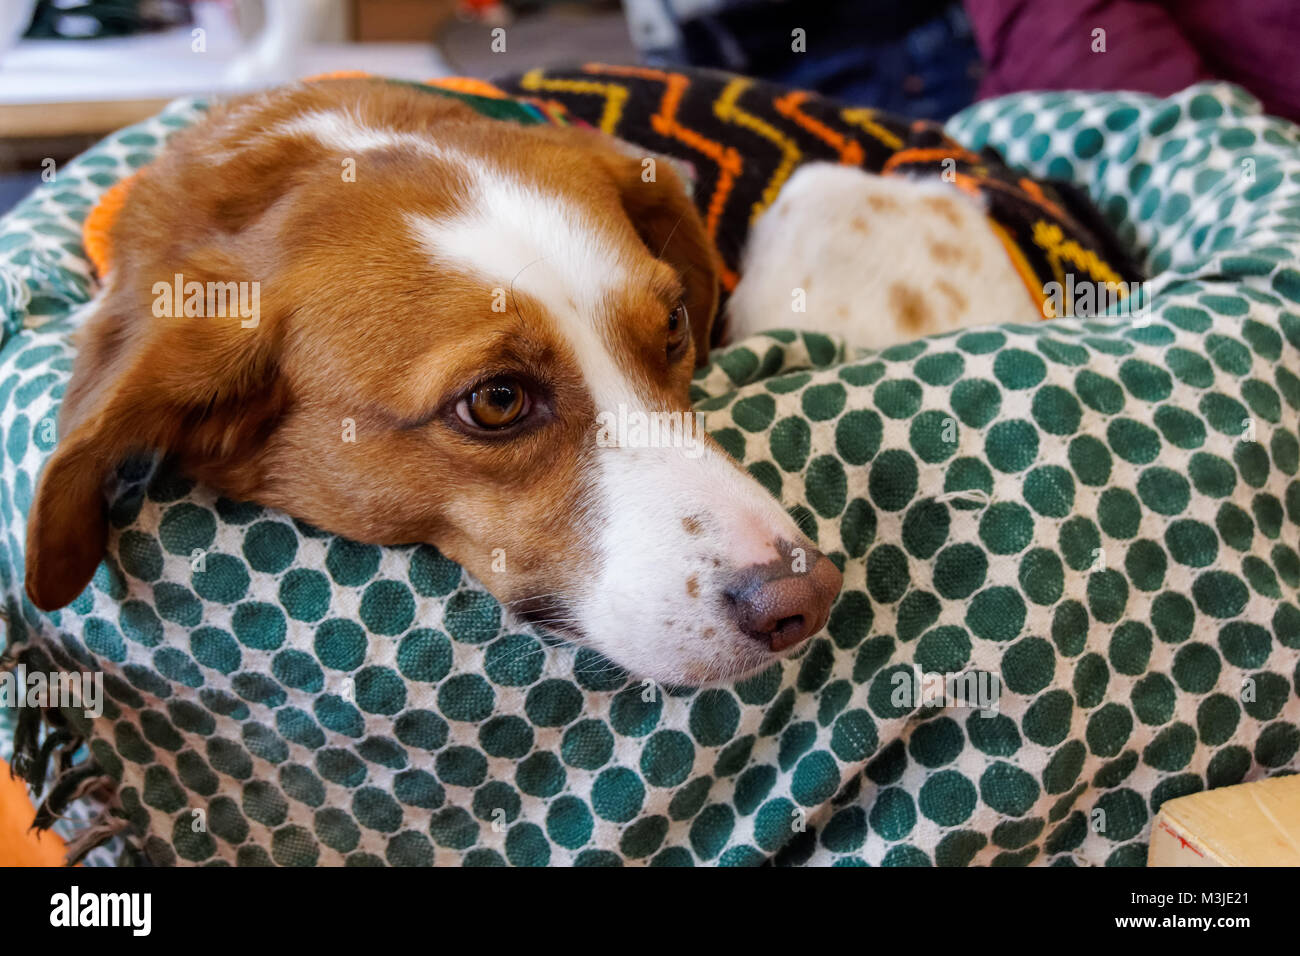 Dog in warm coat lying in a basket Stock Photo